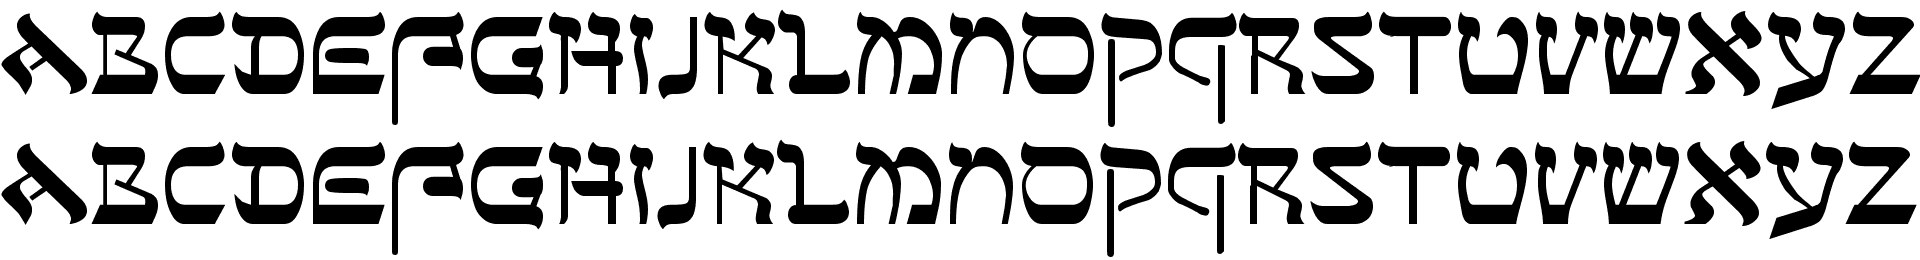 hebrew latin font free download